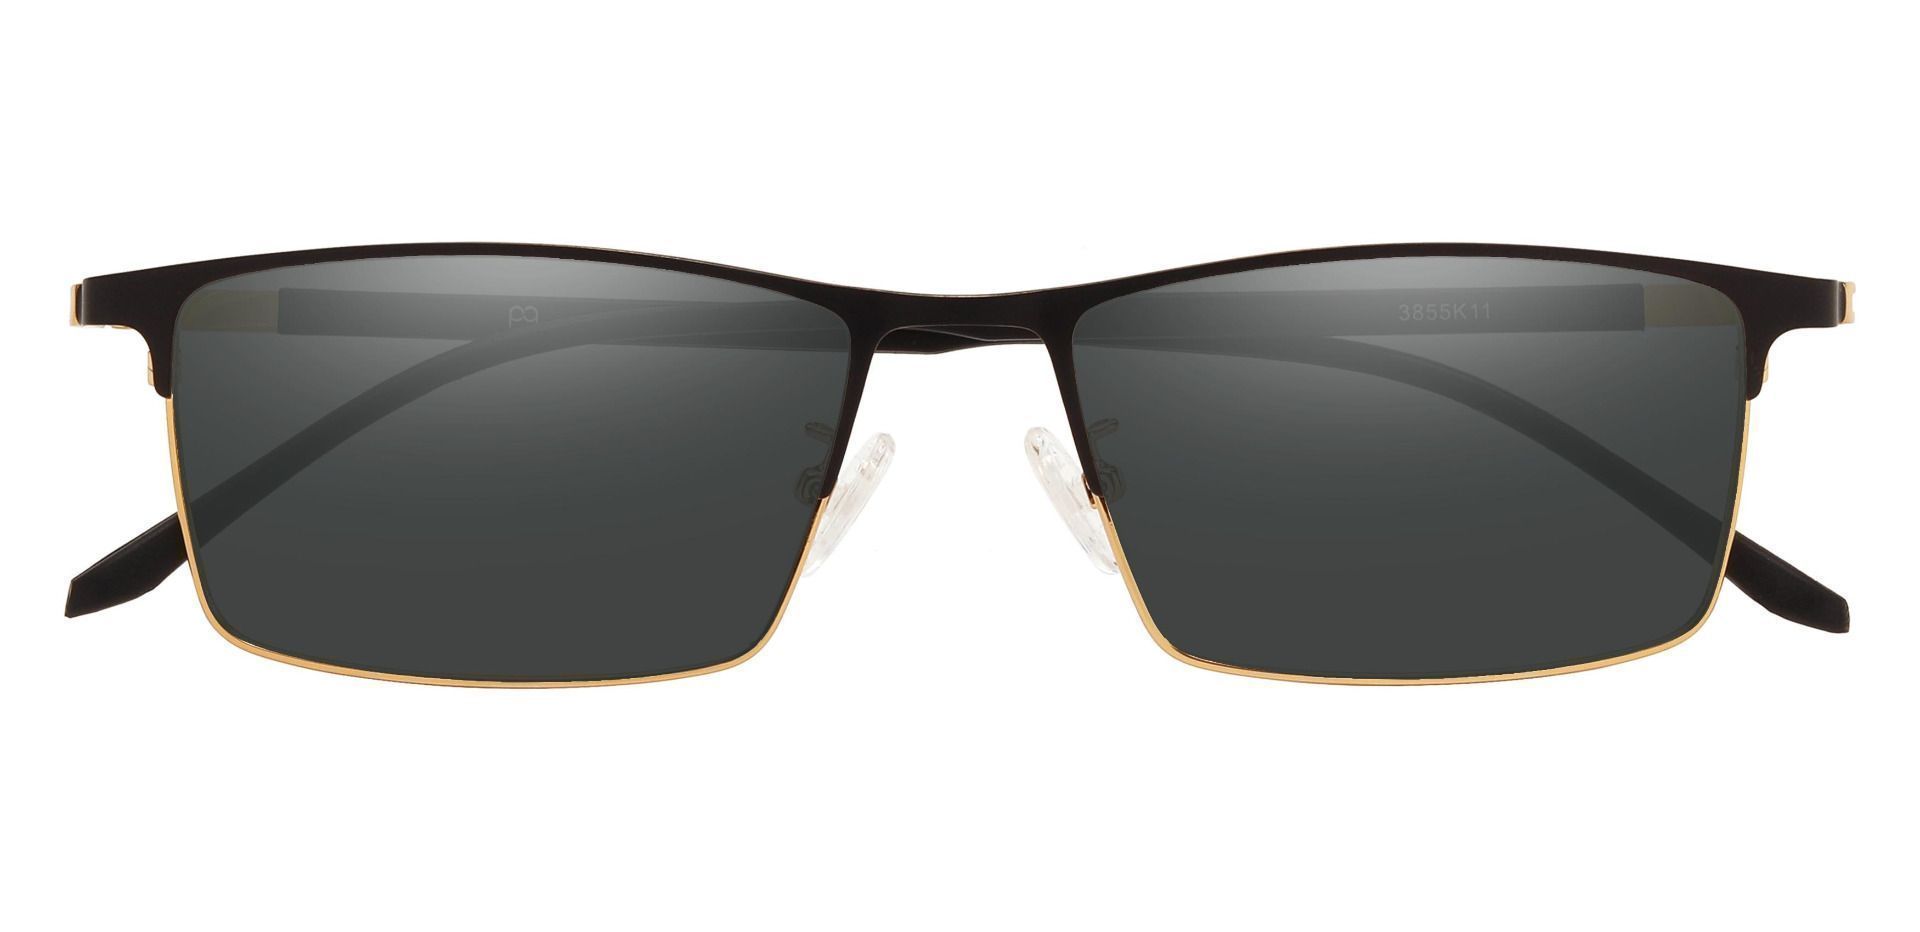 Regis Rectangle Non-Rx Sunglasses - Black Frame With Gray Lenses